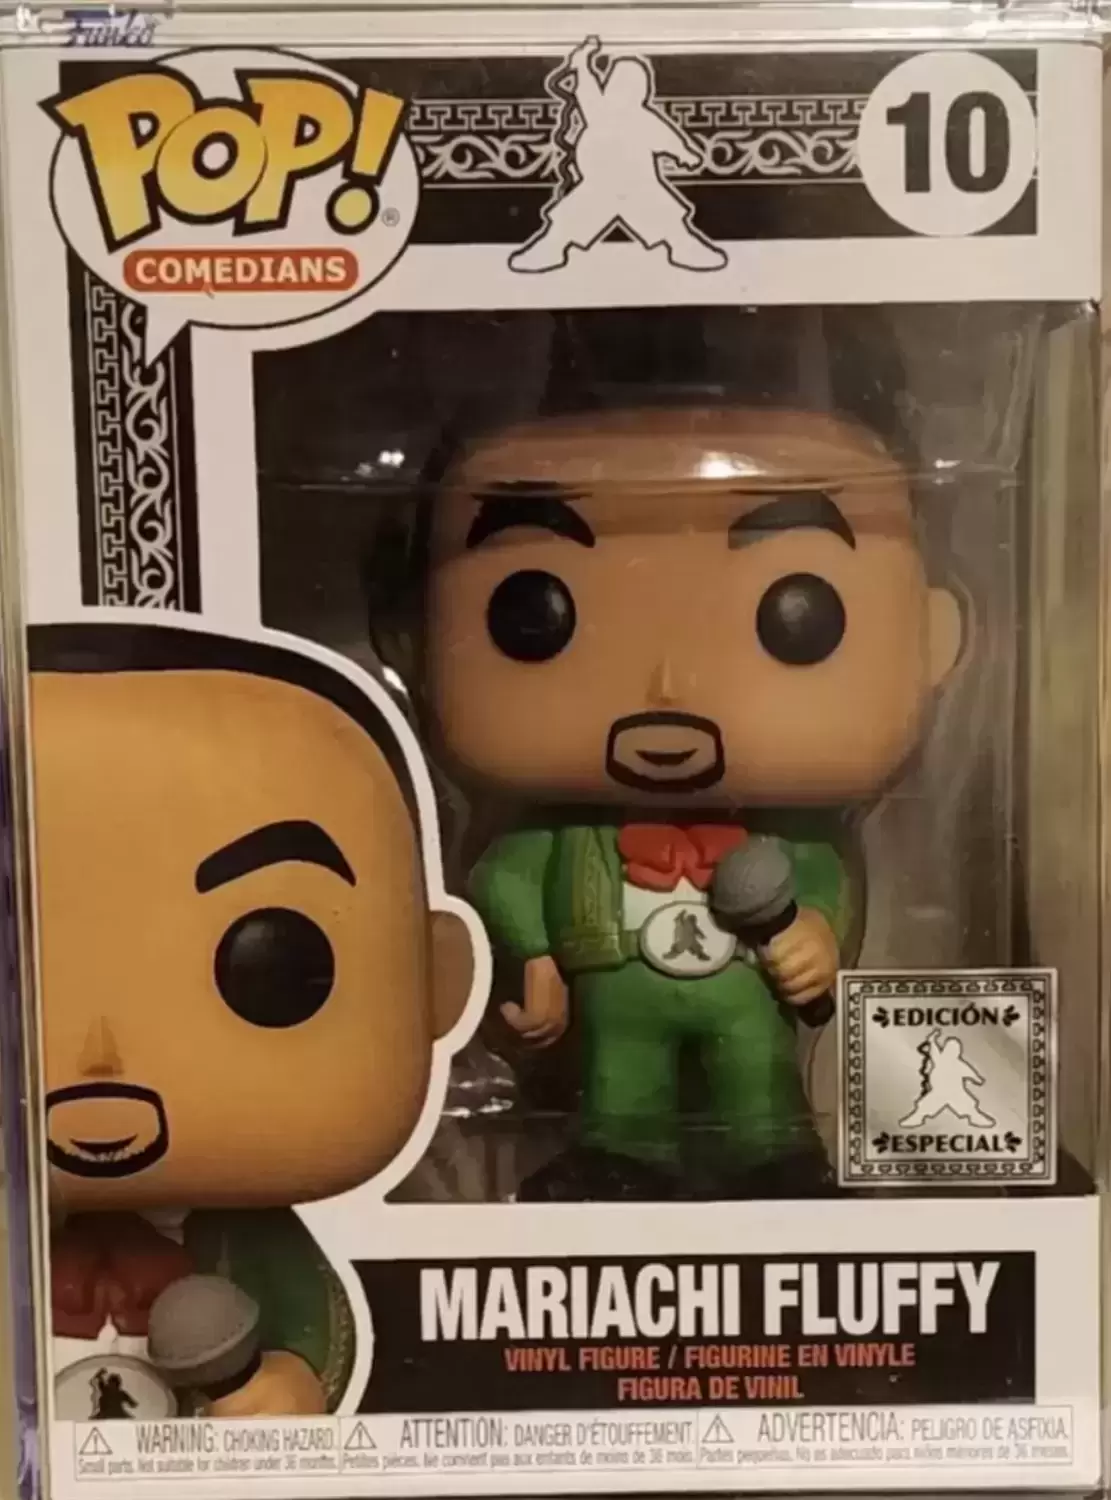 POP! Comedians - Mariachi Fluffy Green Suit